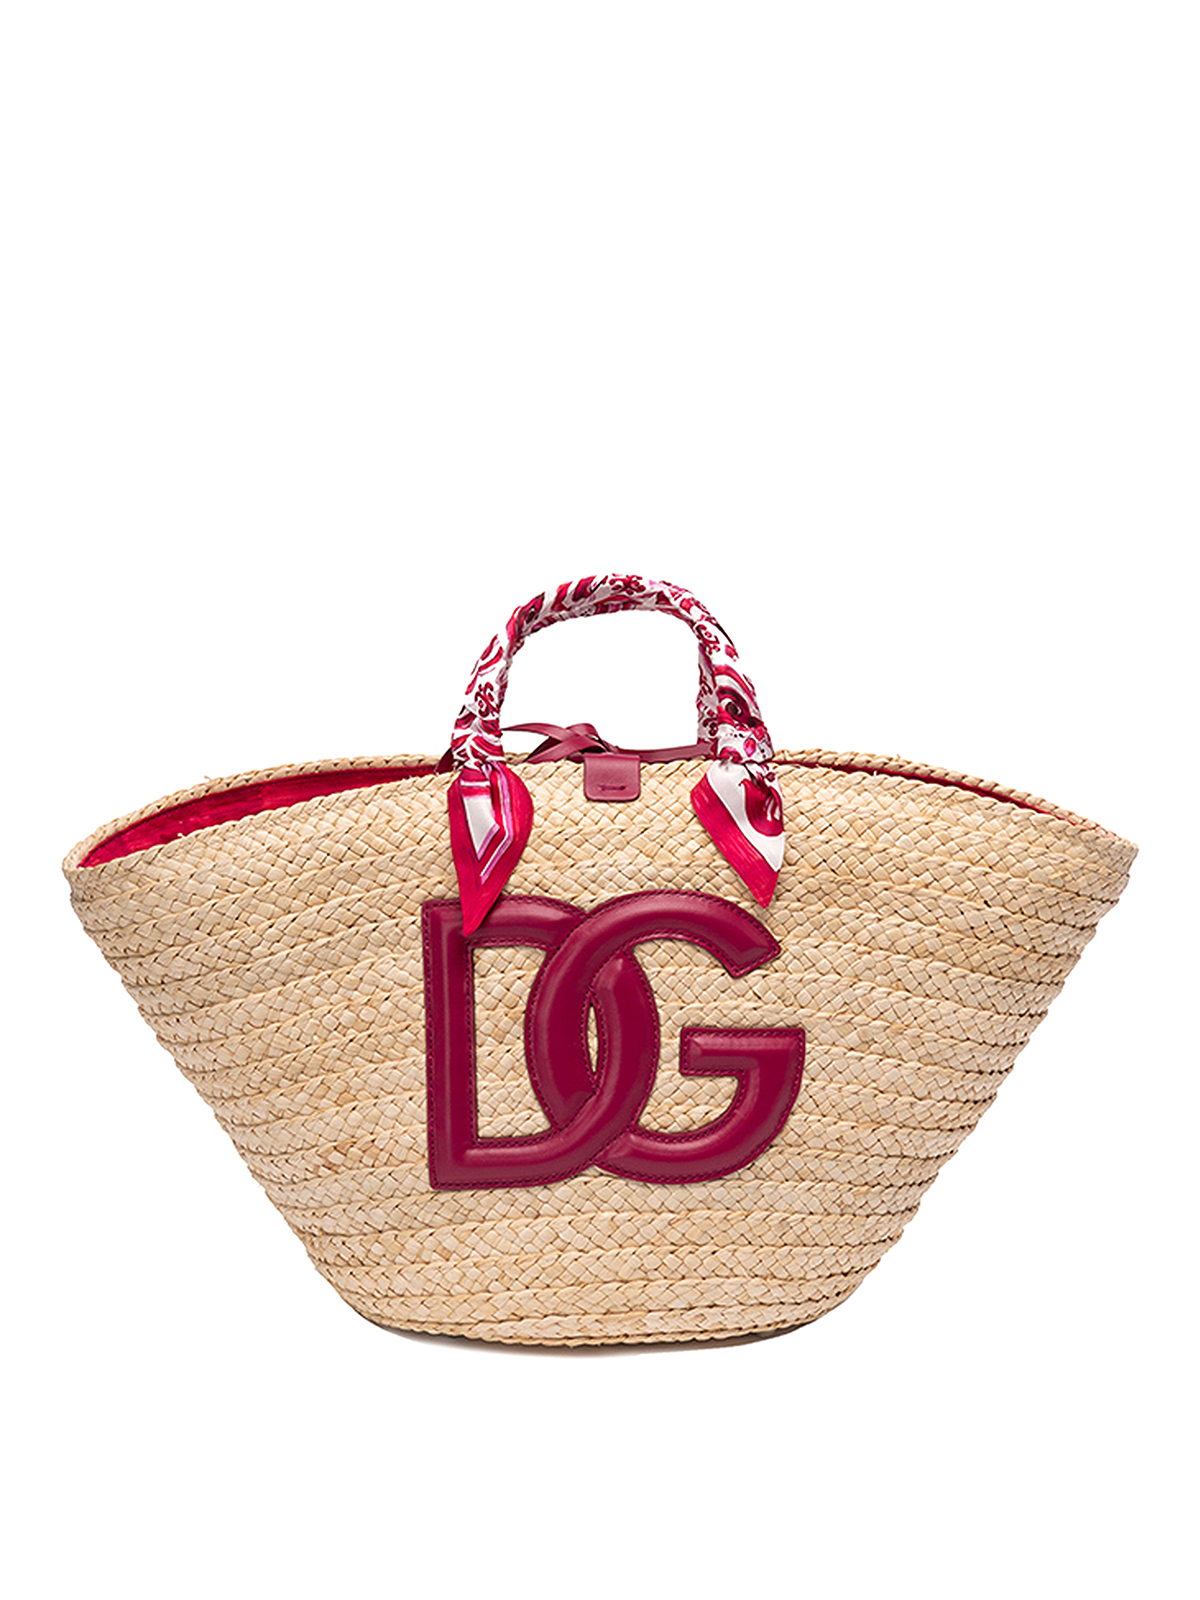 Dolce & Gabbana Kendra DG Logo Tote Bag